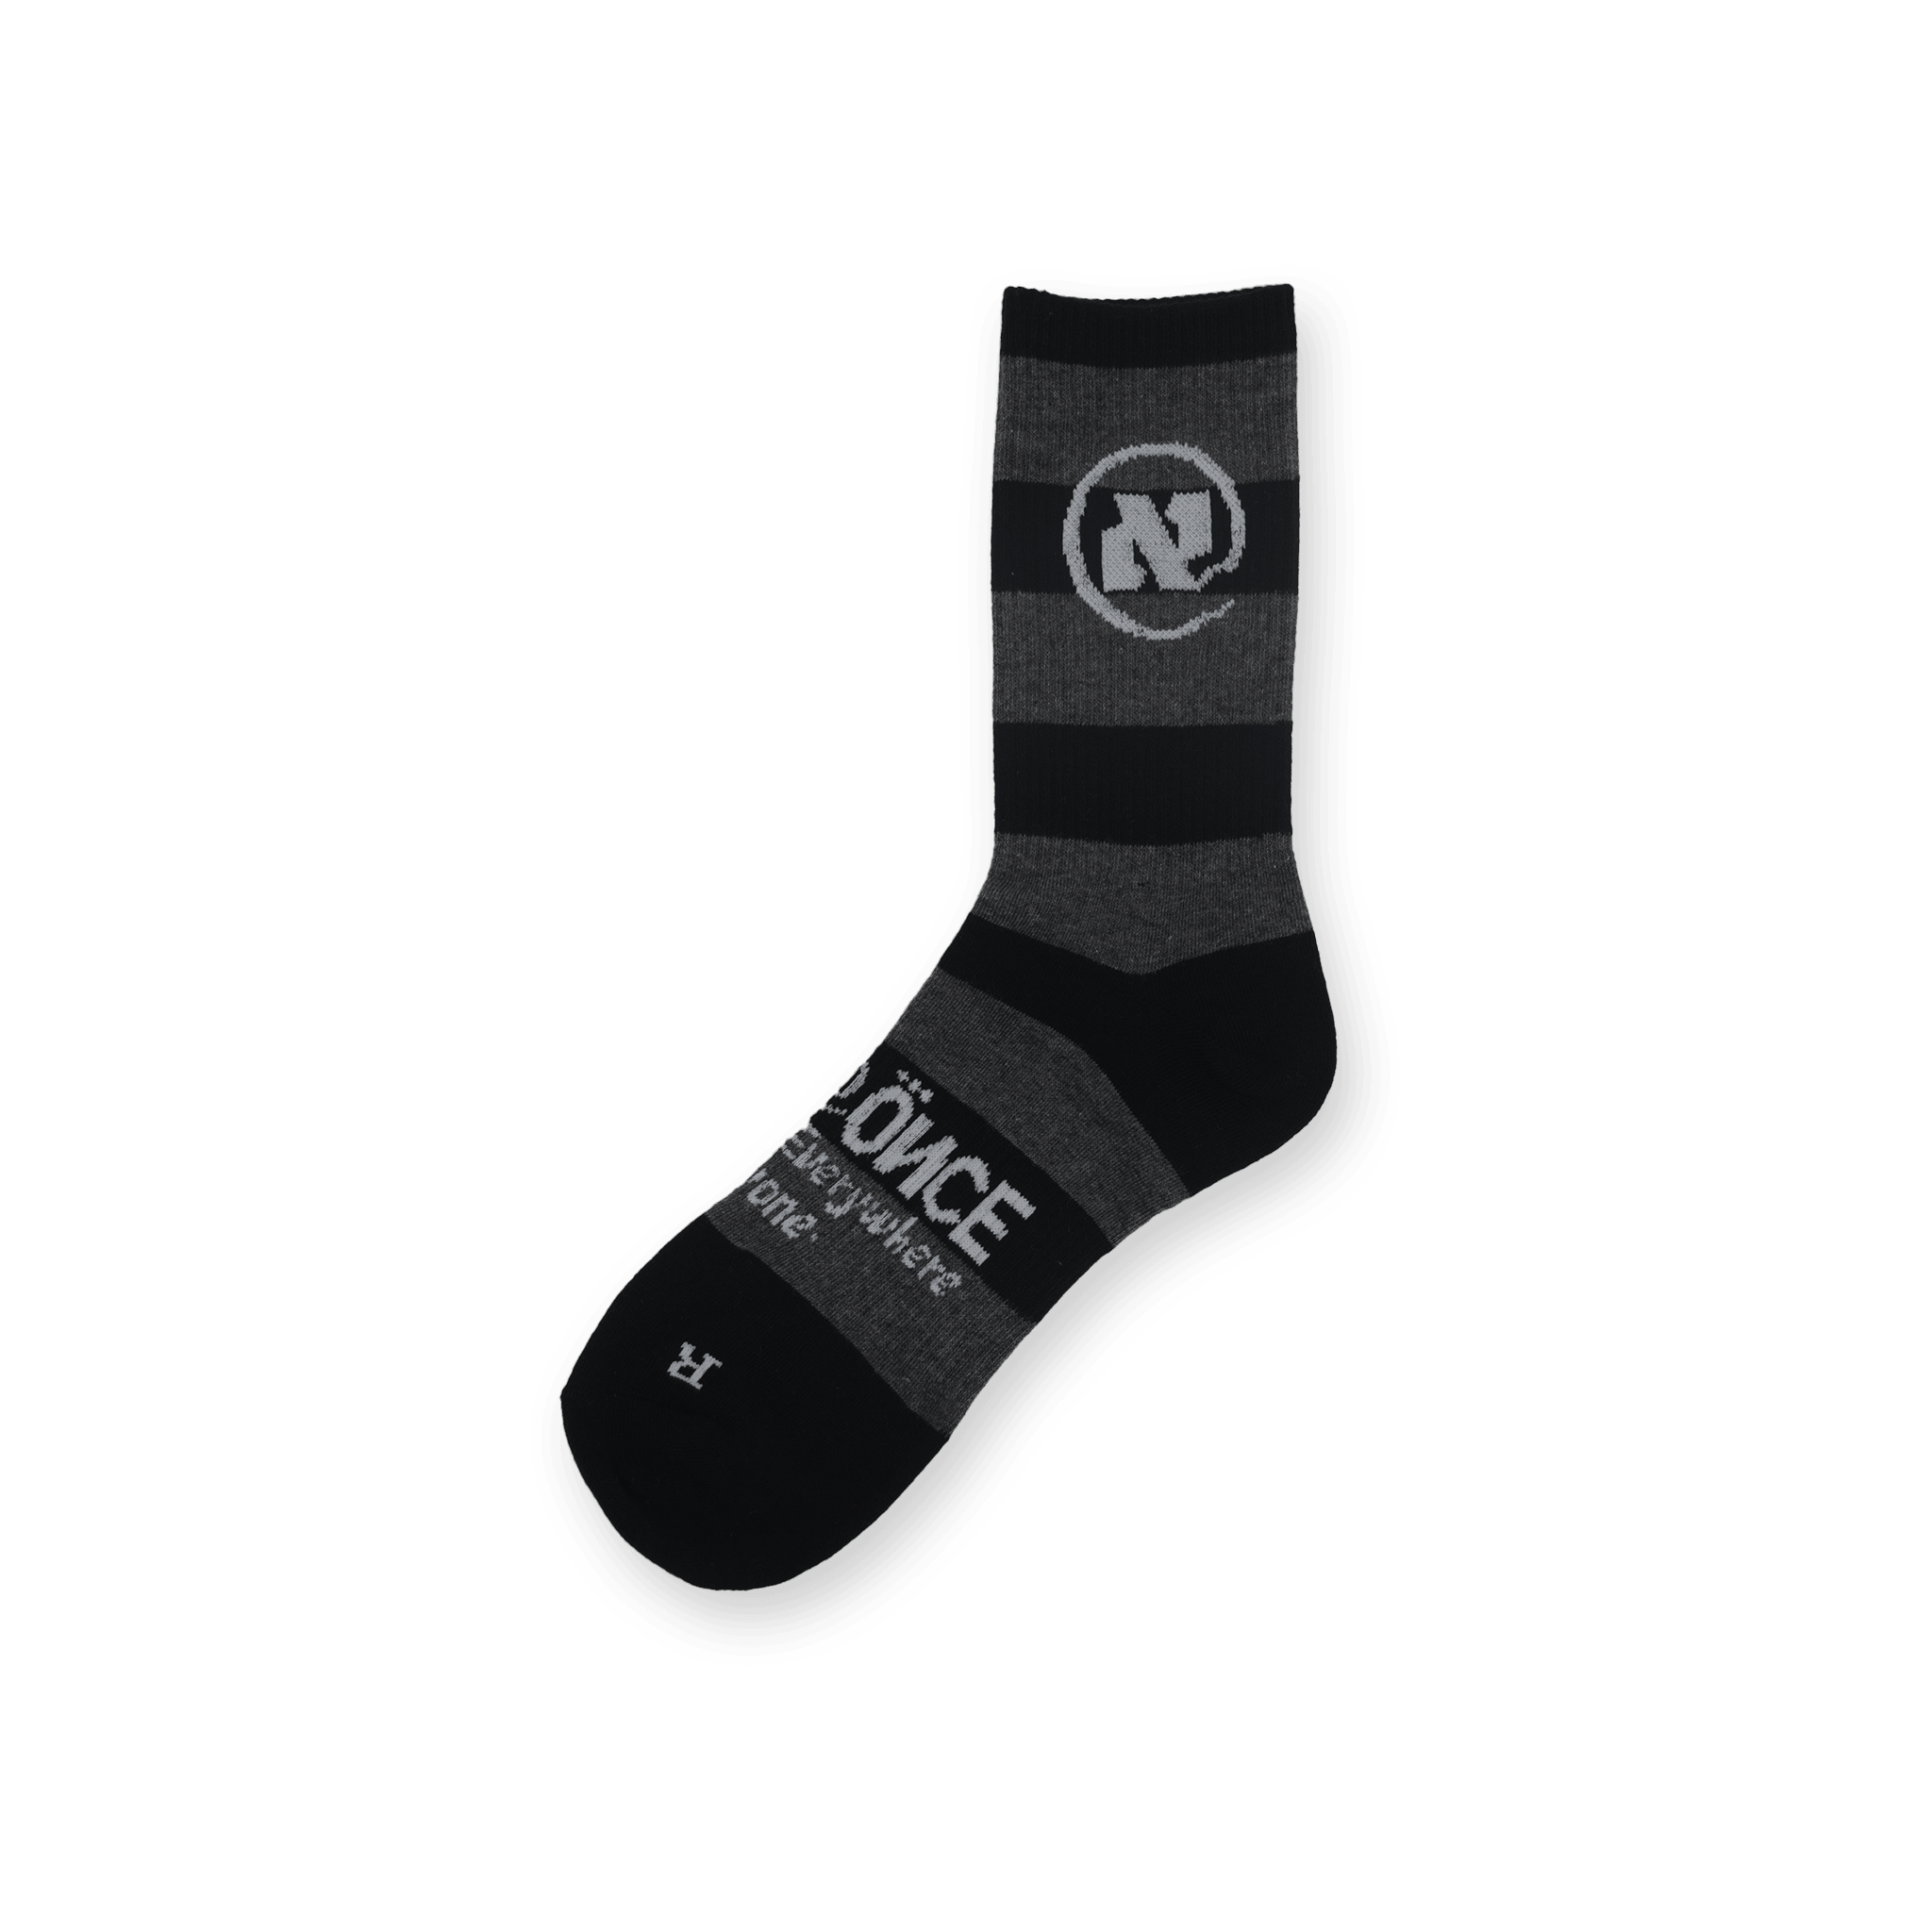 Black And Grey Striped Alef Socks - All@Once